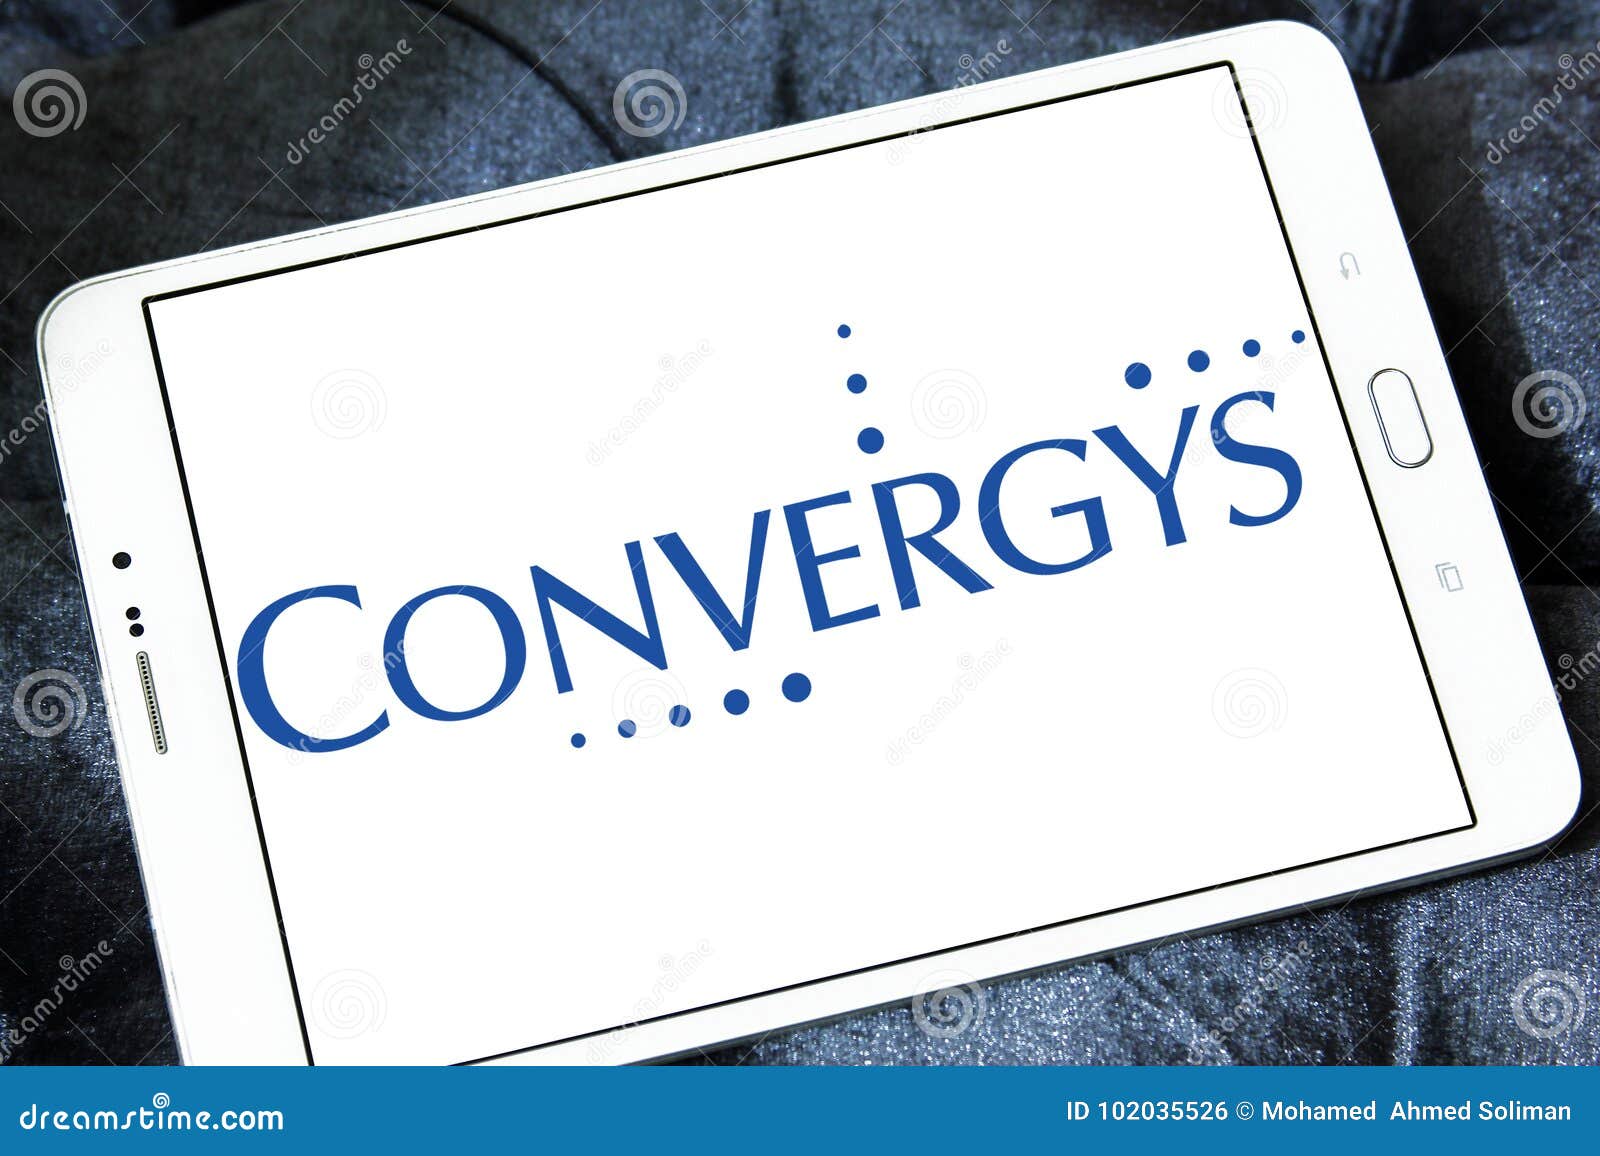 Convergys Corporation Logo Editorial Photo Image Of Illustration